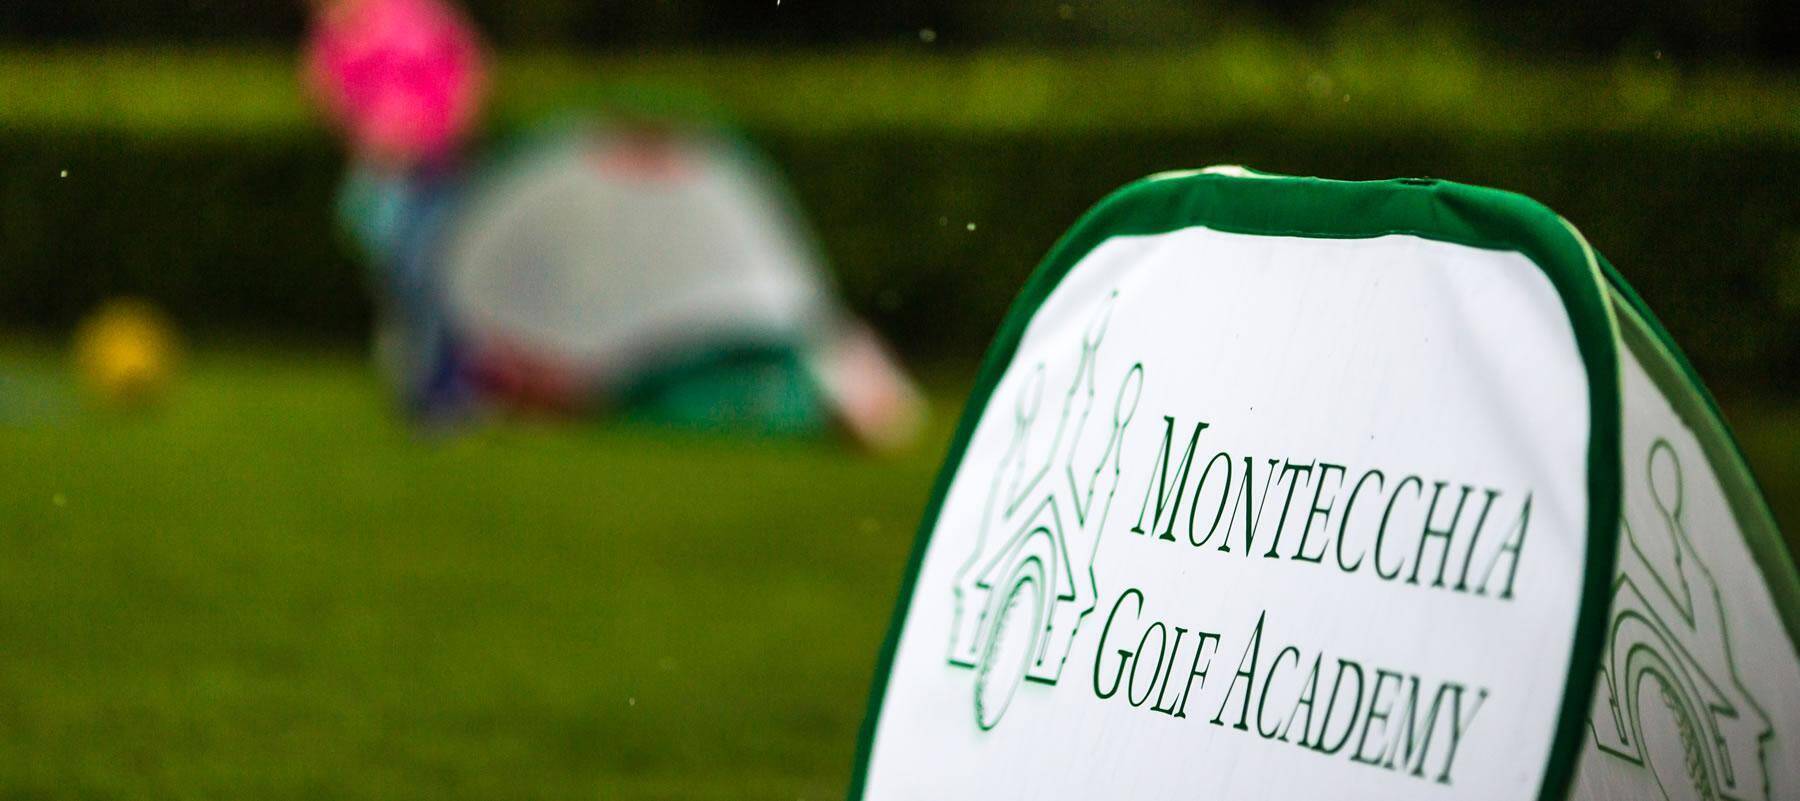 Collaboratori Montecchia Golf Academy